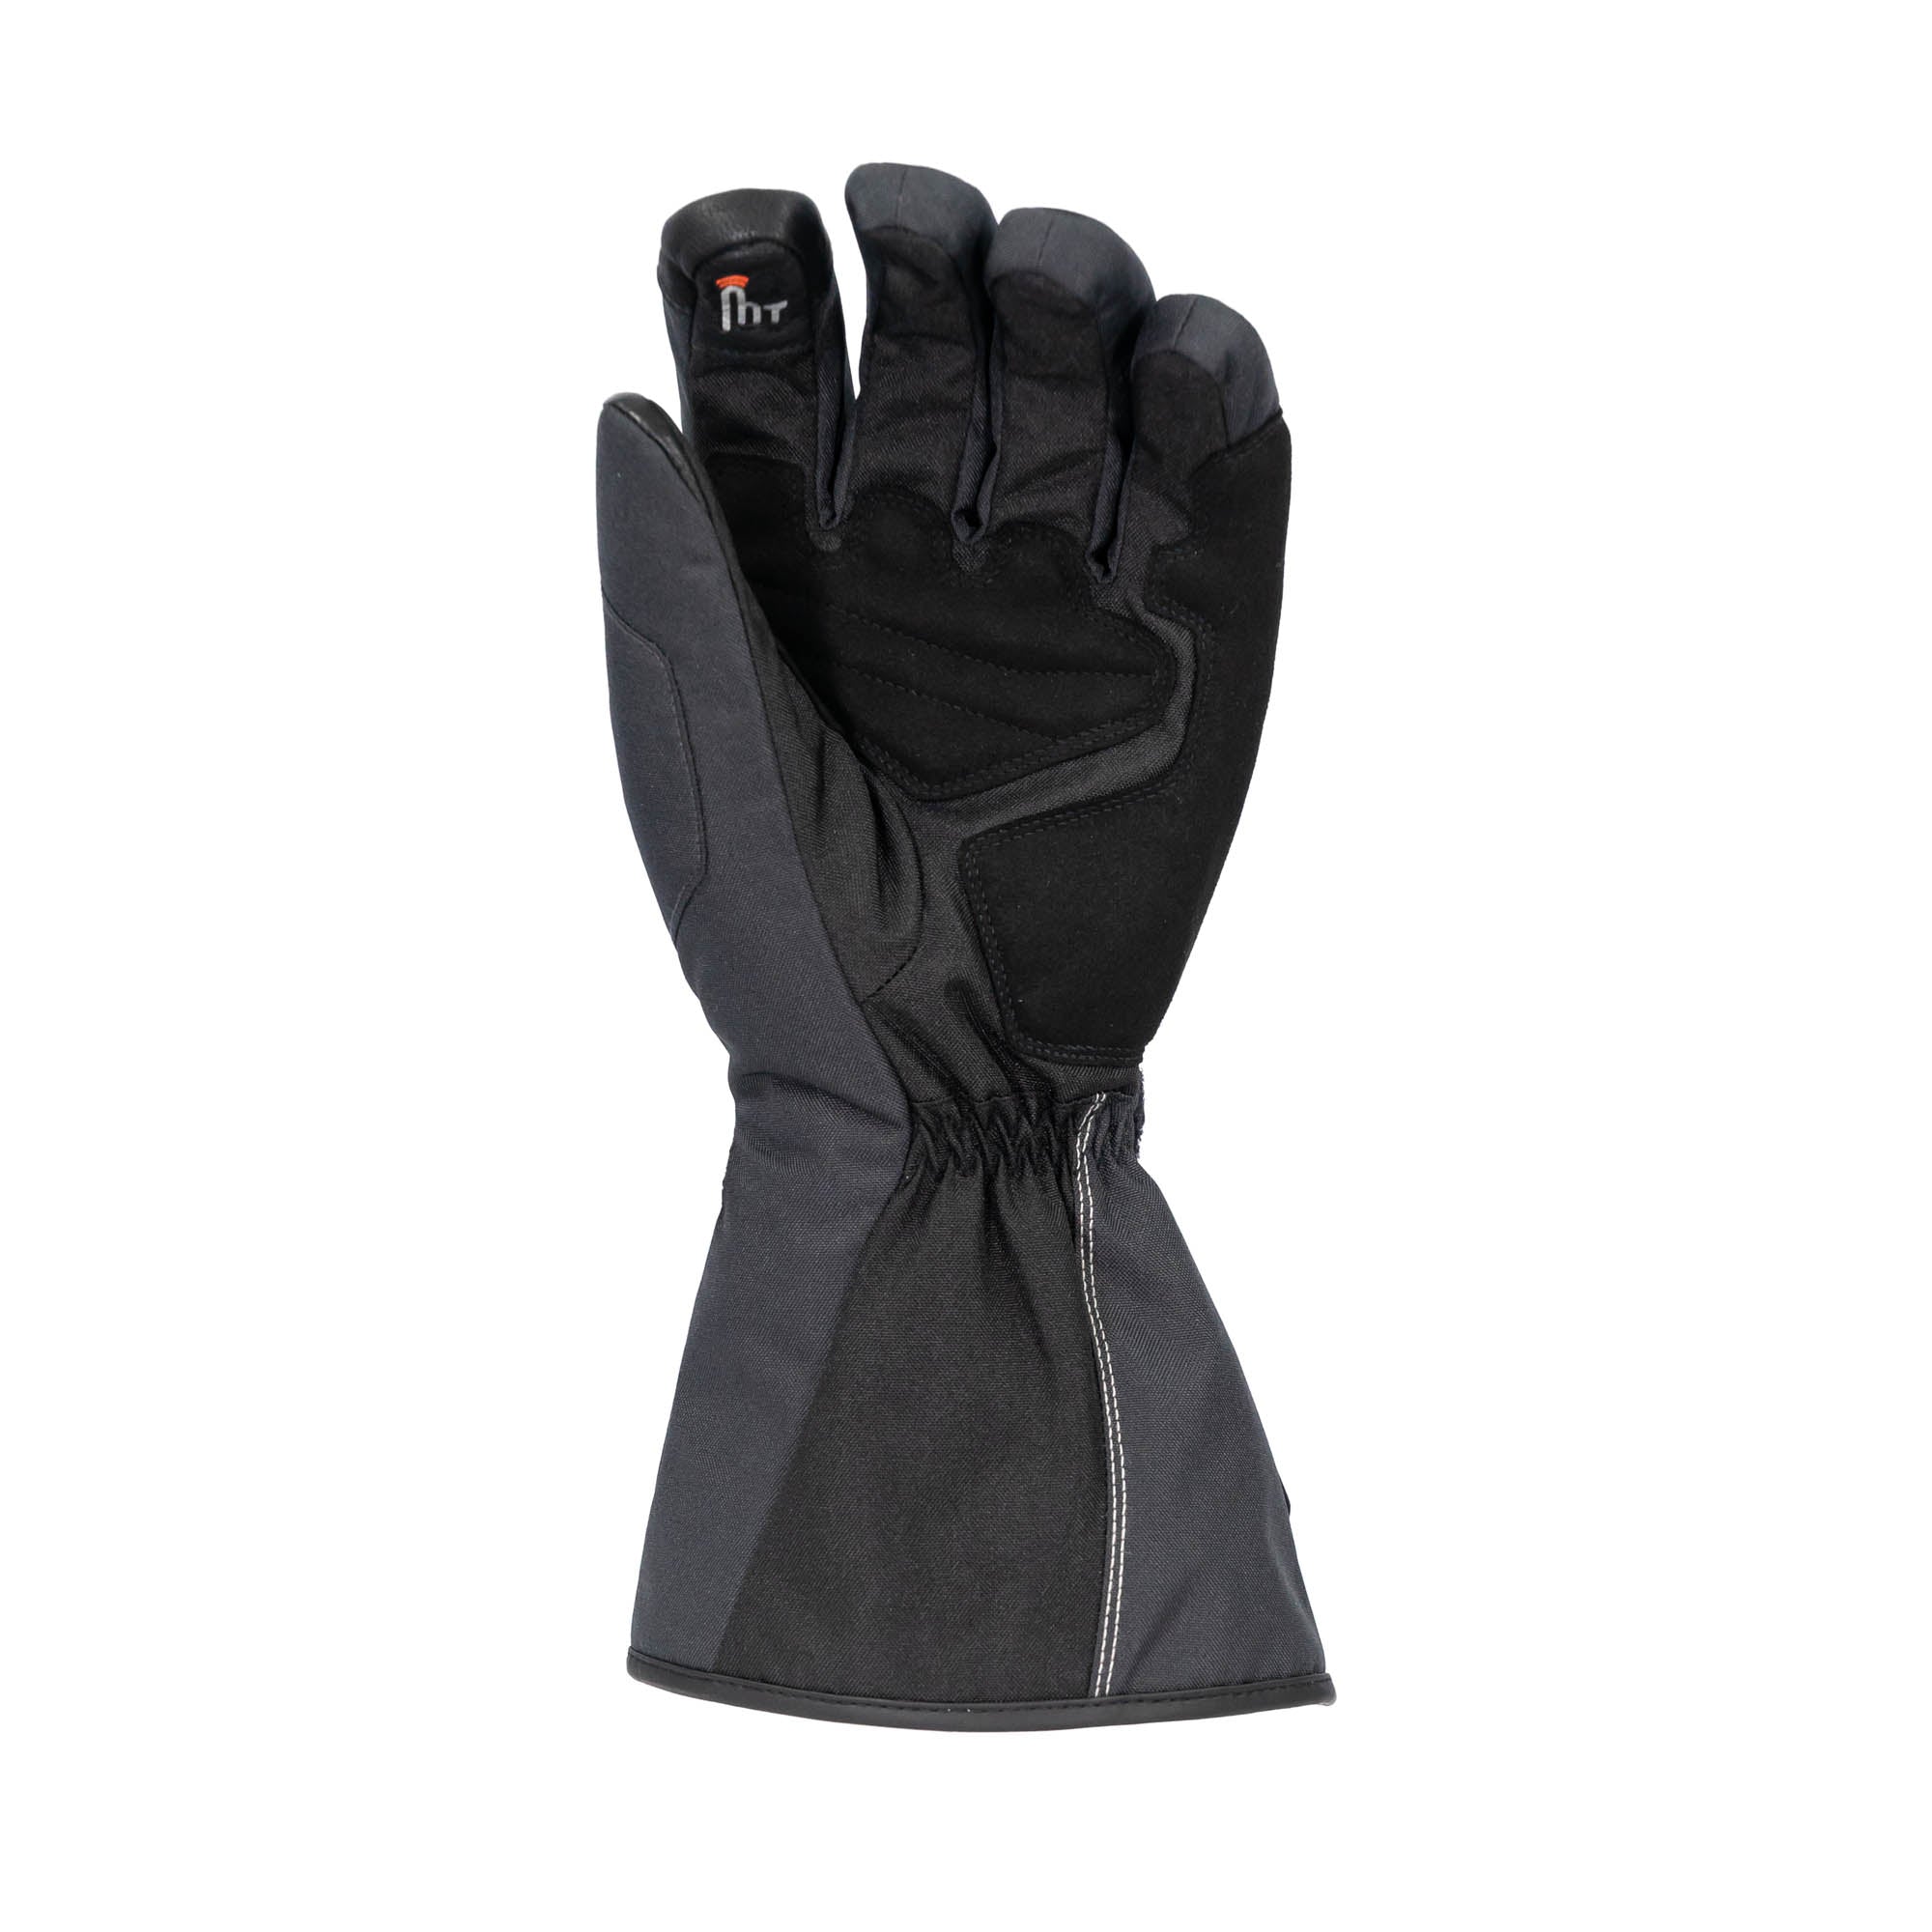 Wirester Orange/Black Heat Resistant Gloves for Using 3D Vacuum Heat Transfer Machine, 3 Pairs, Men's